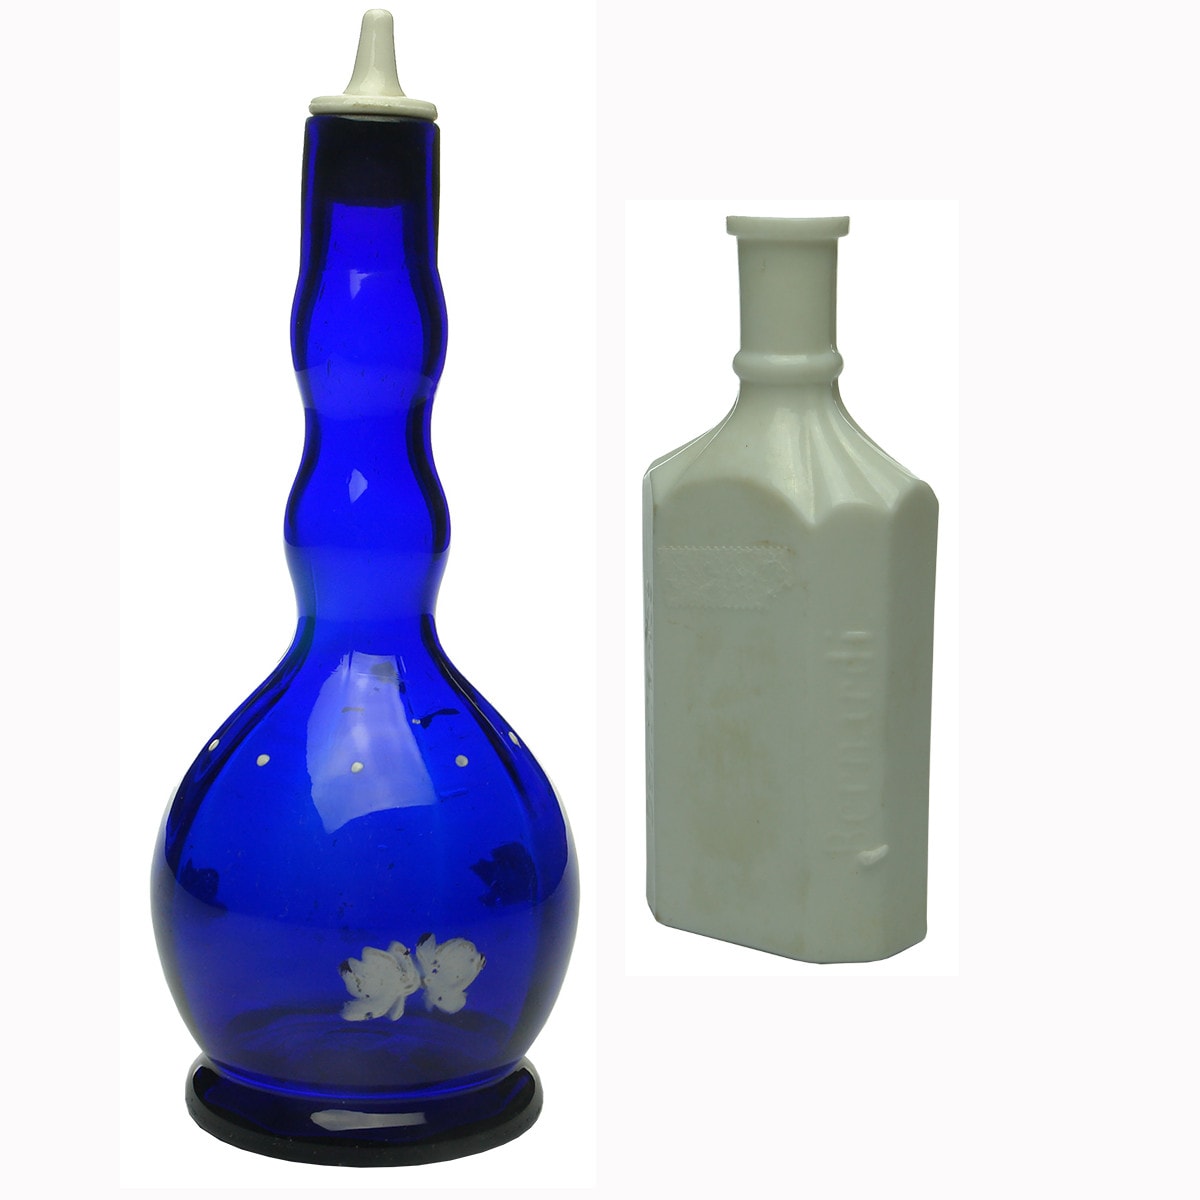 Pair of Medicine/Bathroom type bottles: Barbers bottle and Bernardi's Dentifrice.